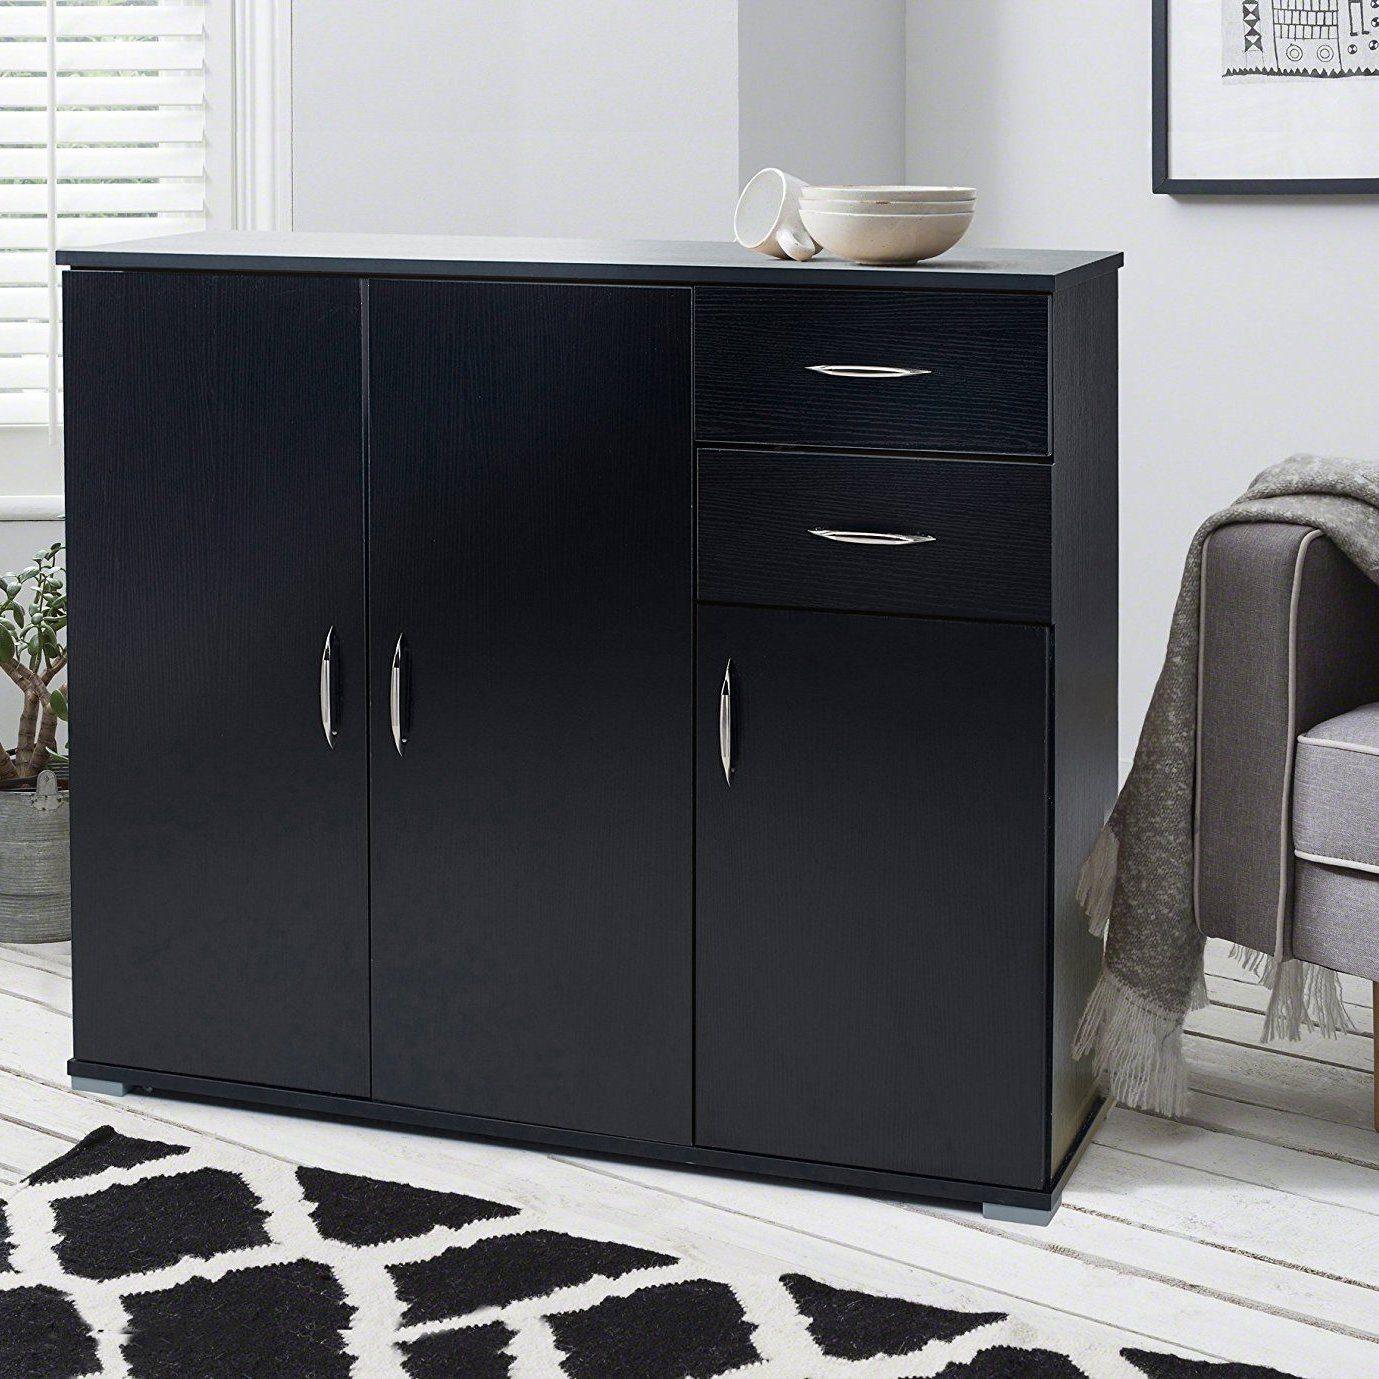 Outlet - Essie - Storage Cabinet - Home Office - Black - Laura James